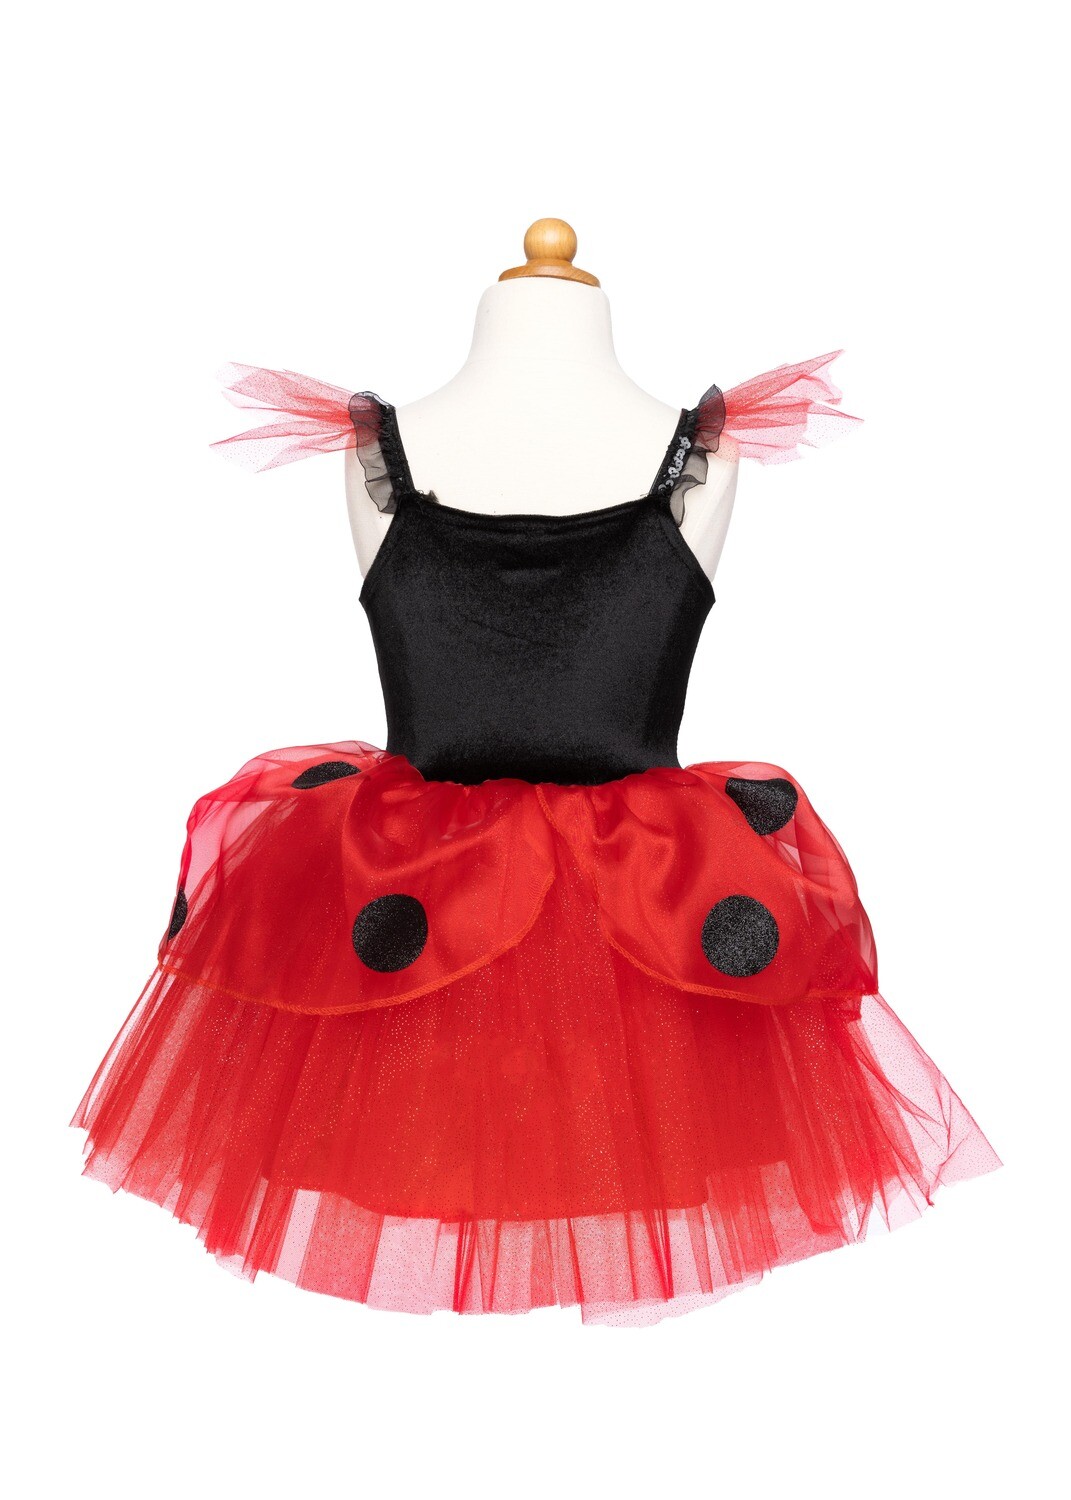 GP Ladybug Dress & Headband, Red/Black, Size 3-4